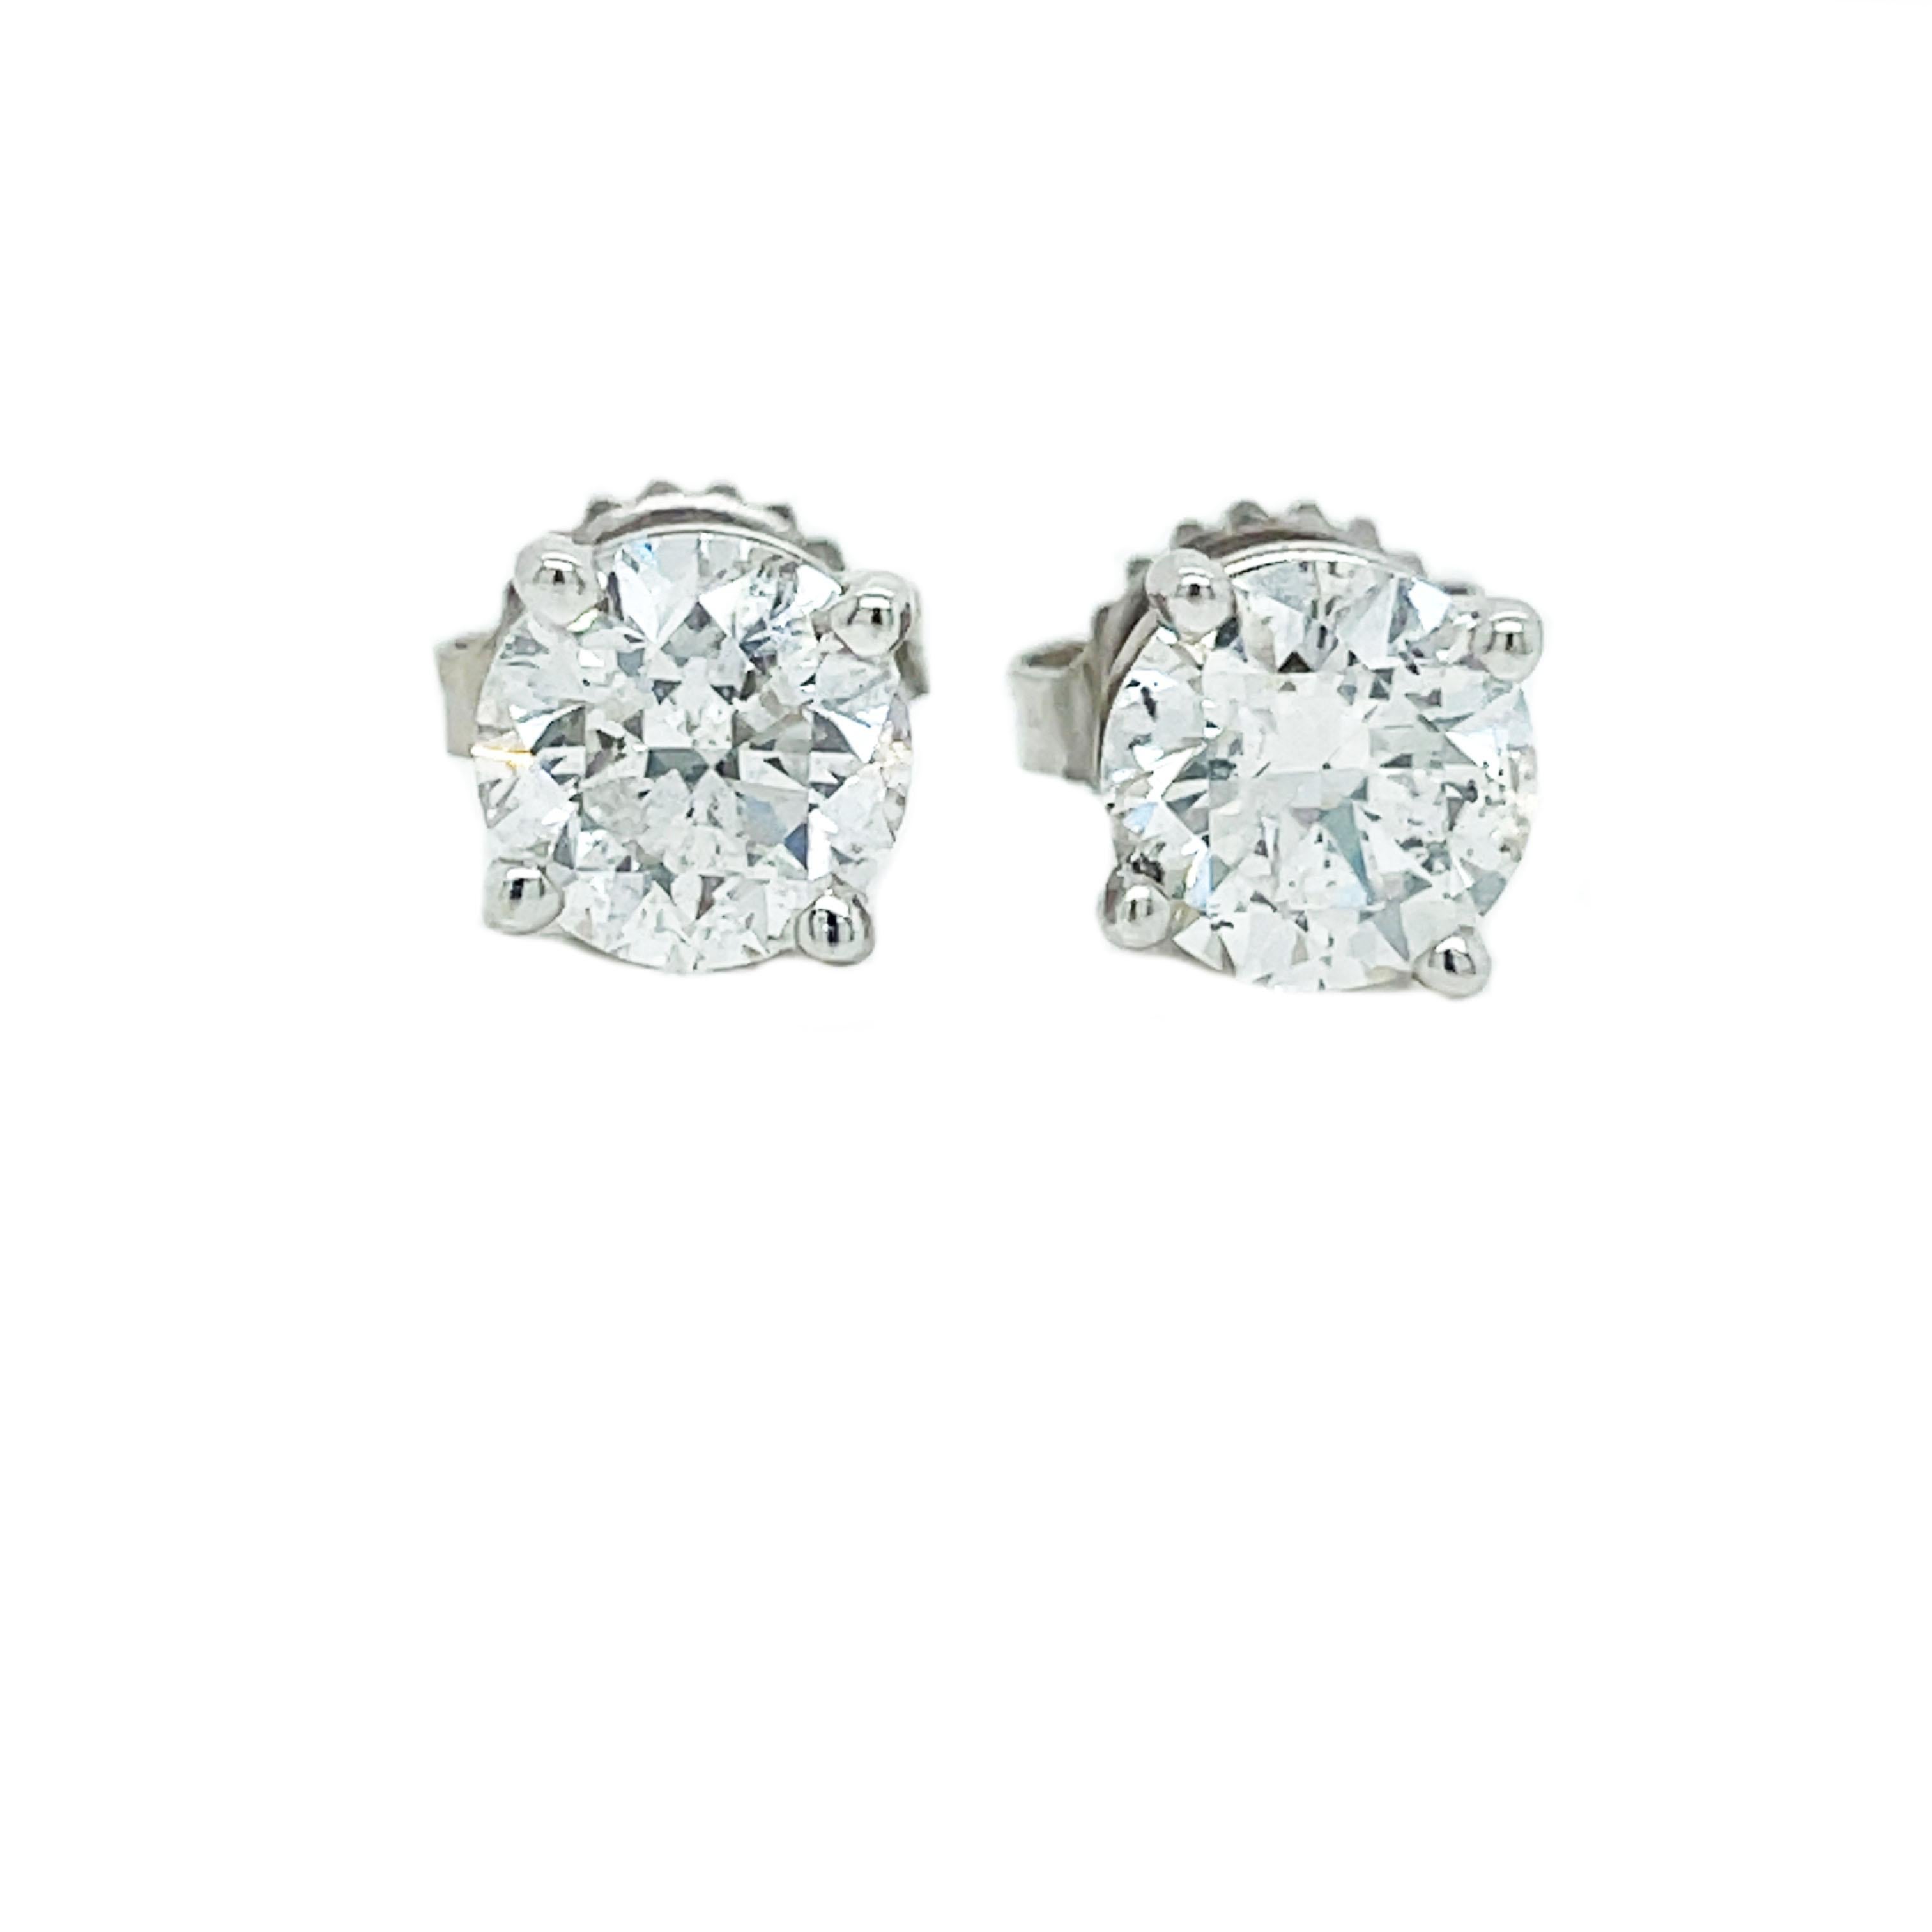 Round Cut 2+ Carat Diamond Stud Earrings in 14K White Gold